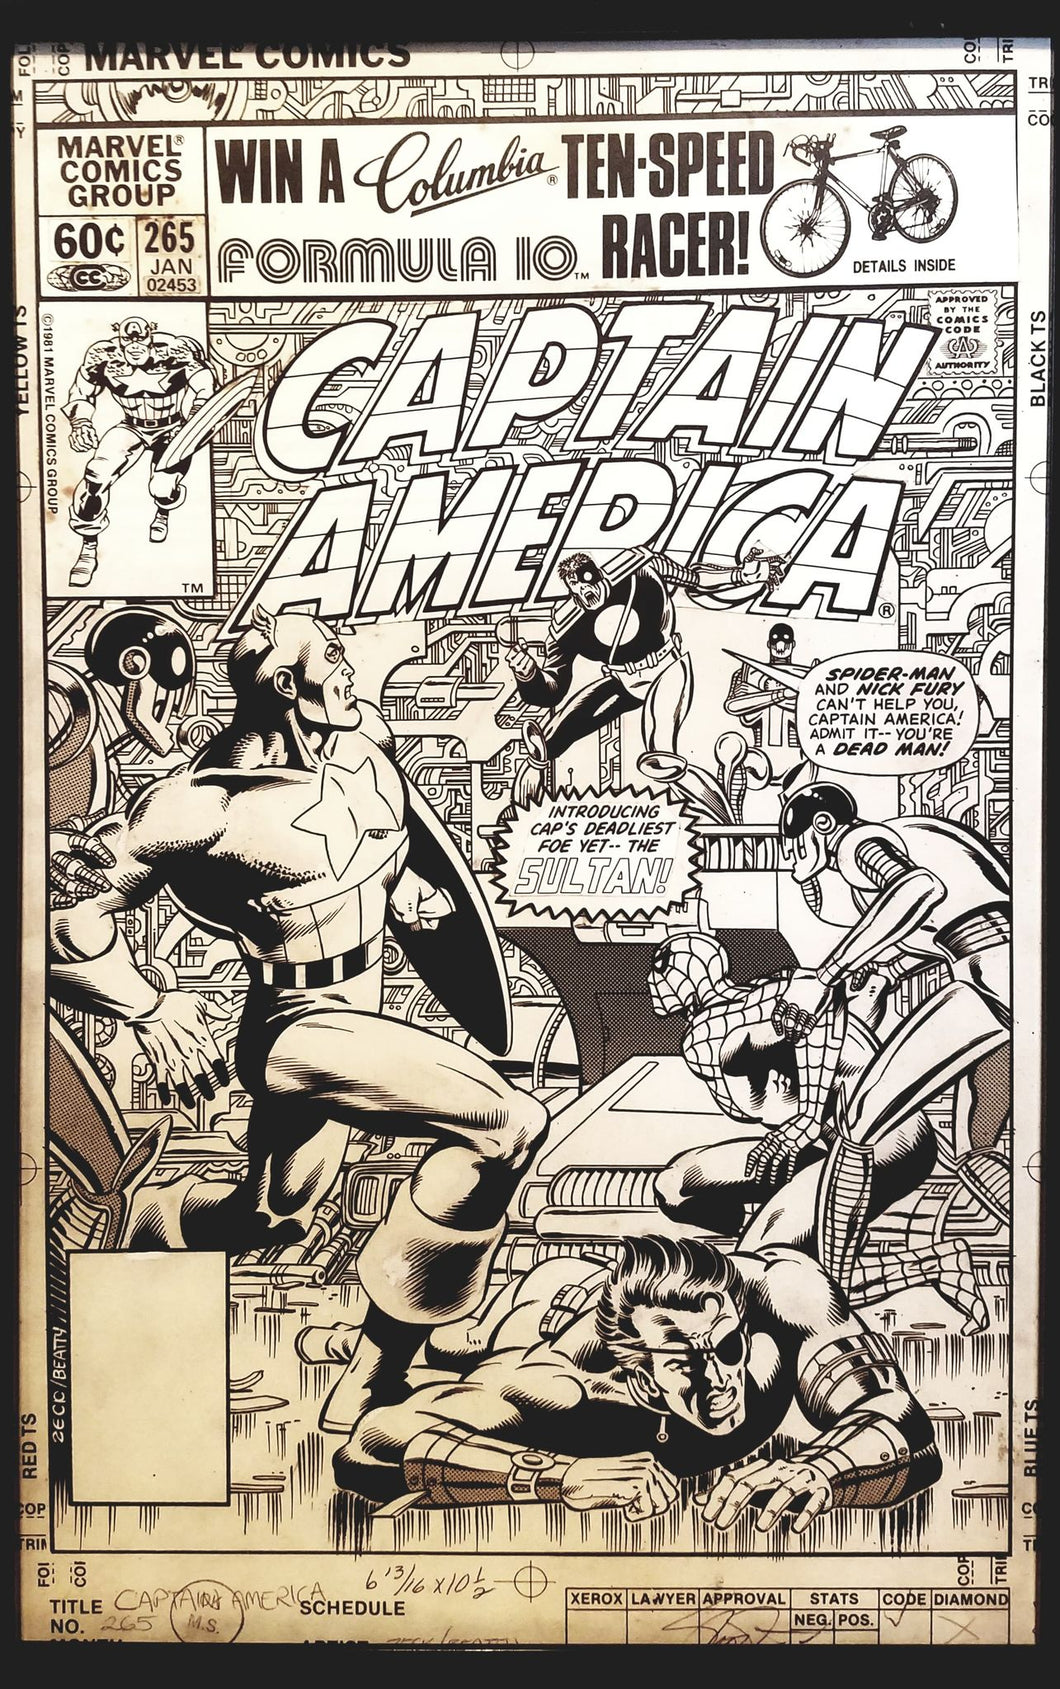 Captain America #265 by Mike Zeck 11x17 FRAMED Original Art Poster Marvel Comics